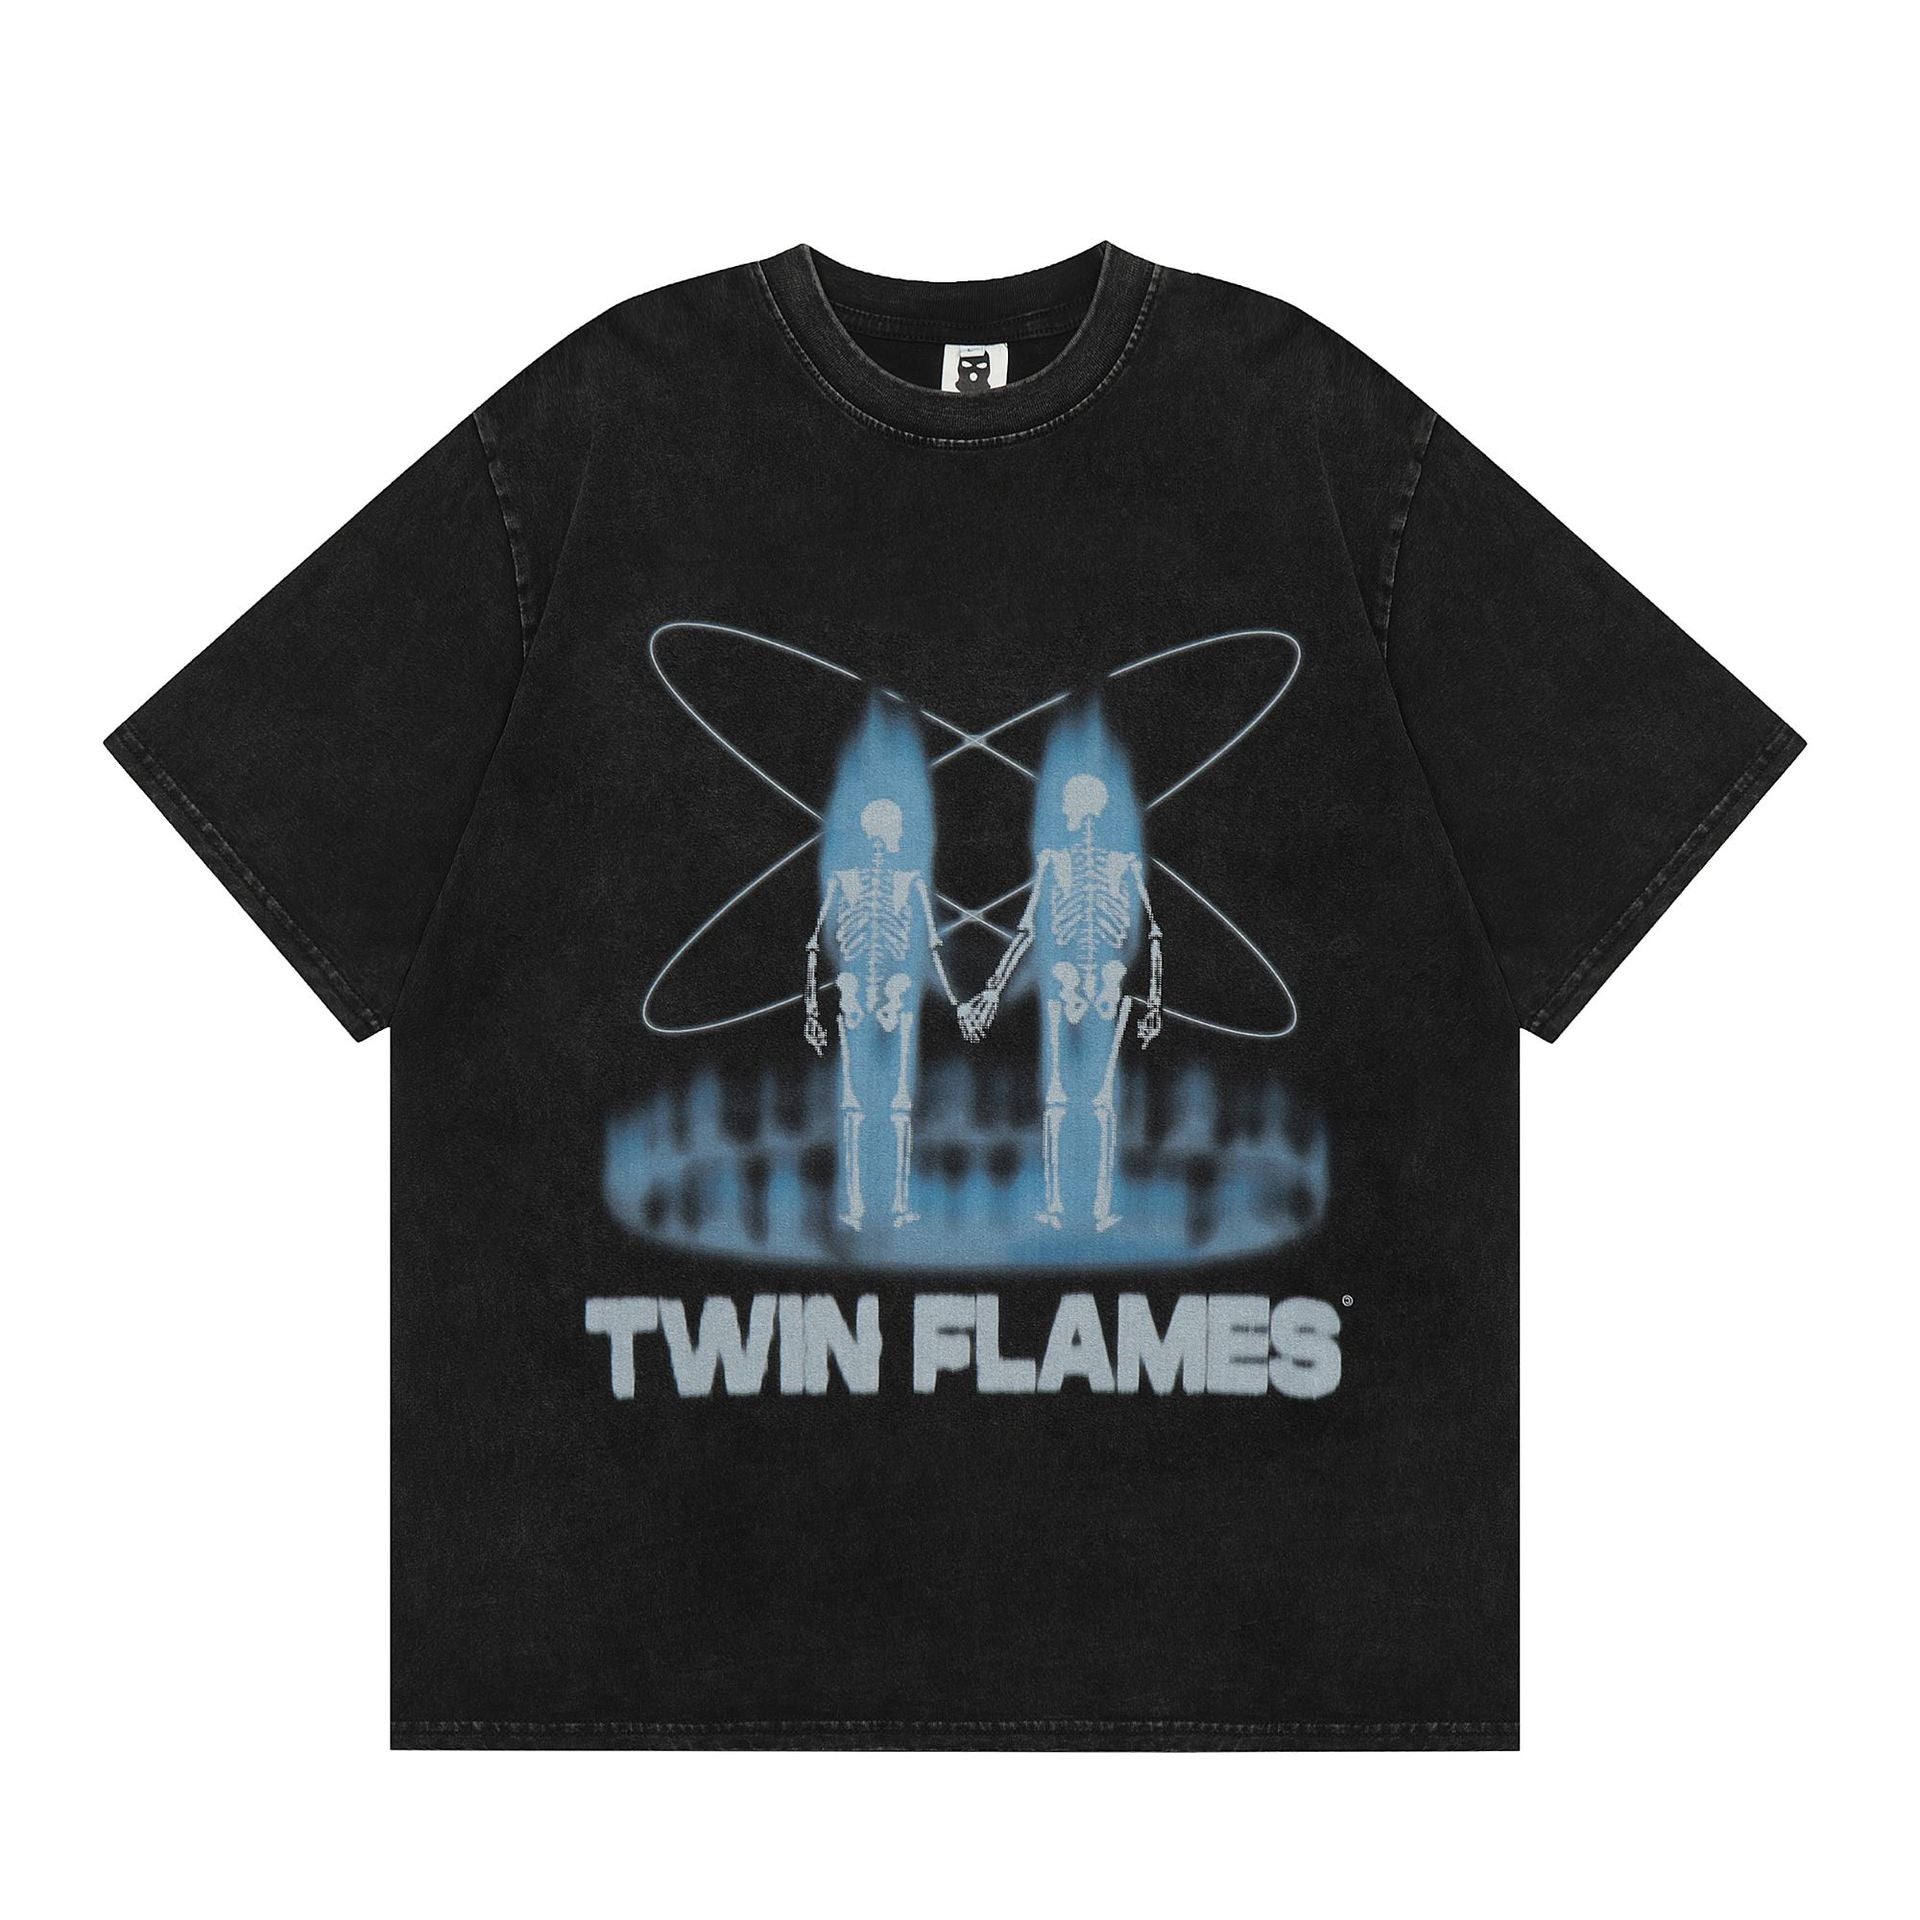 Aesthetic Twin Flames T-shirt